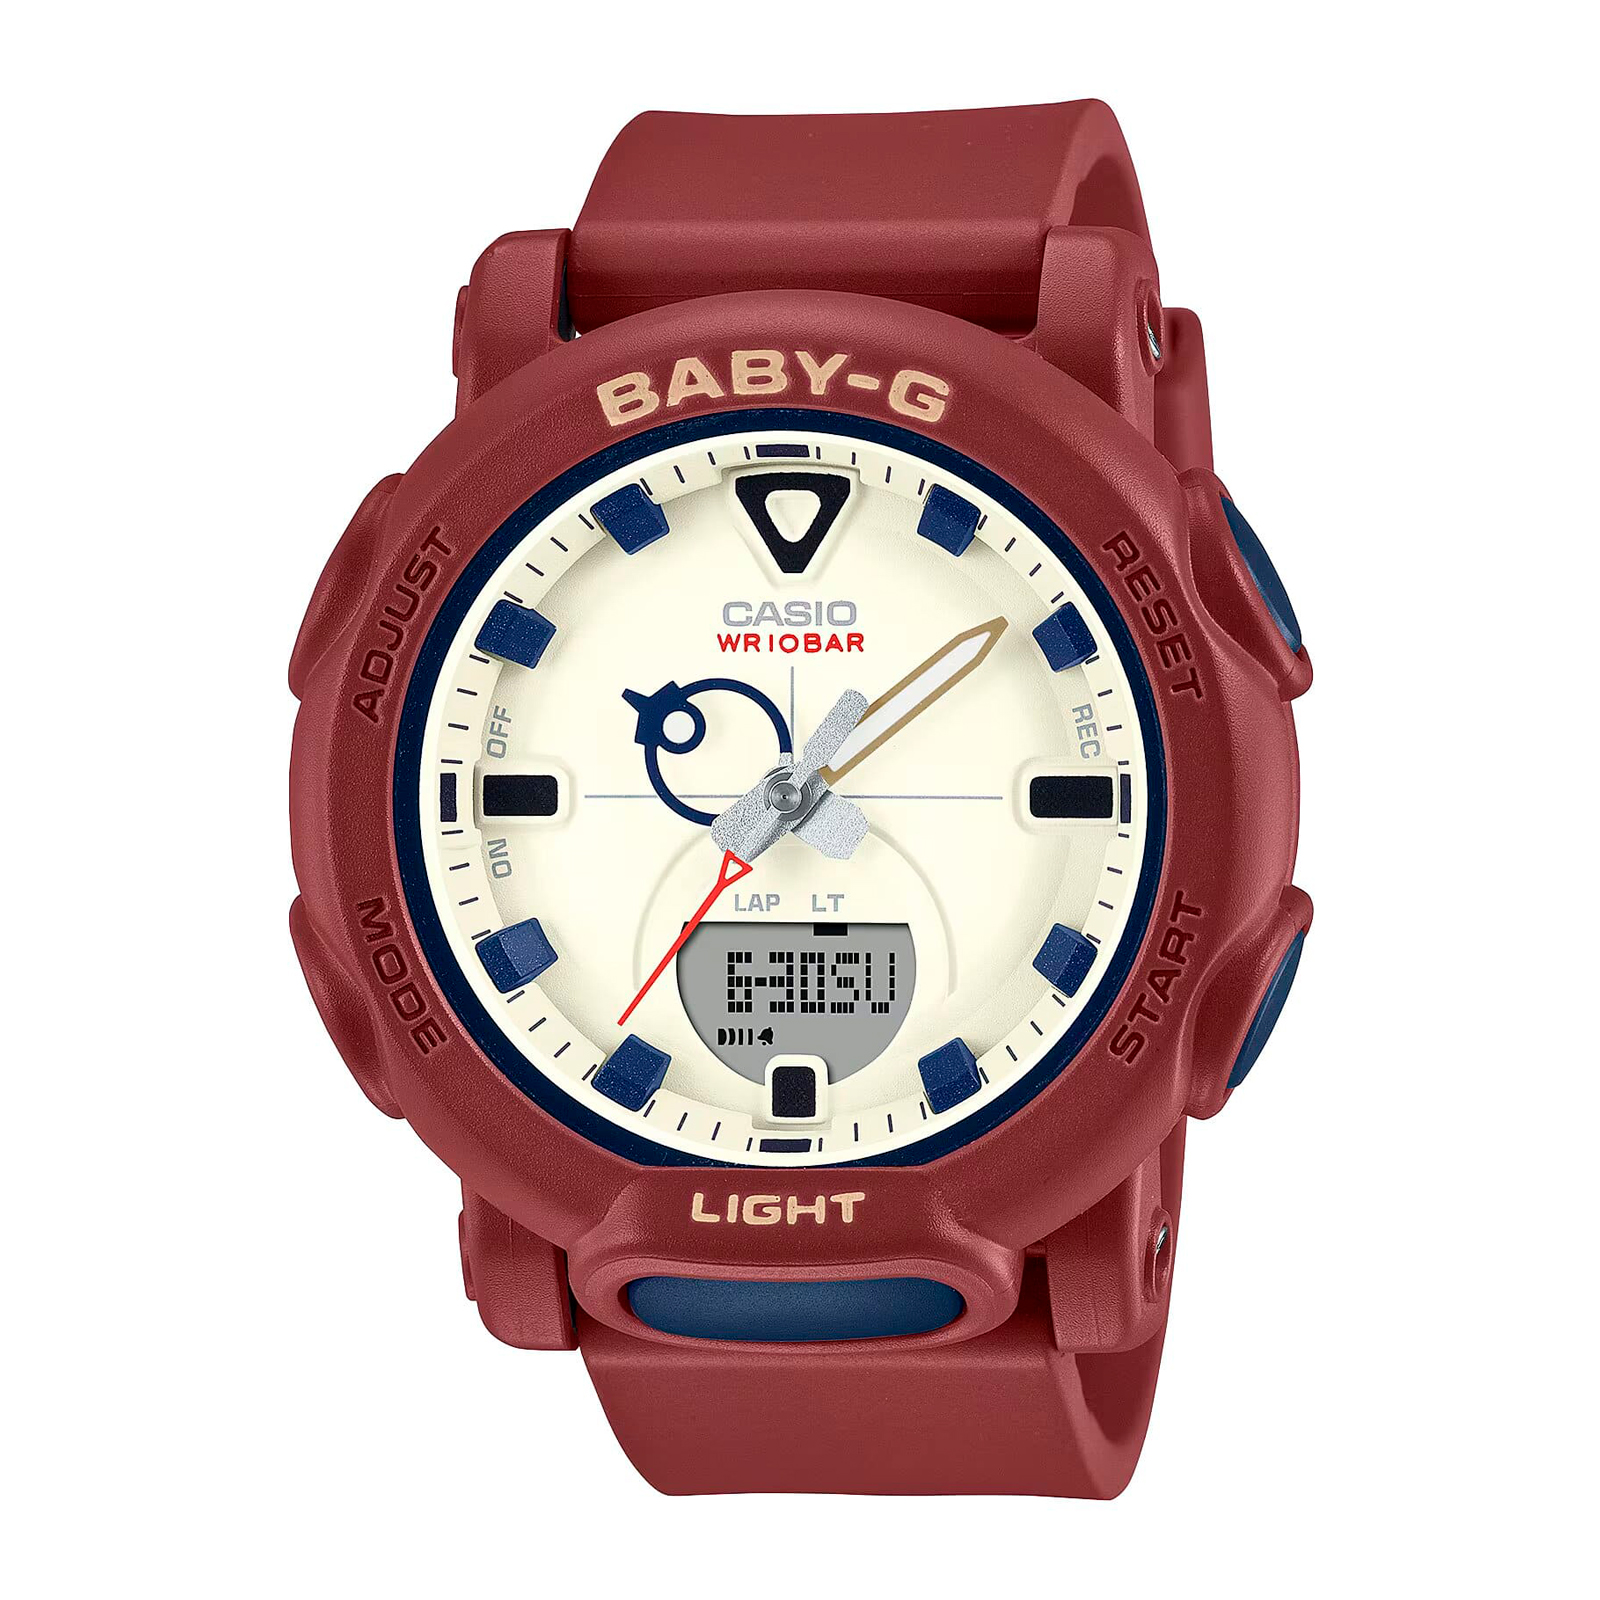 Reloj BABY-G BGA-310RP-4A Resina Mujer Rojo